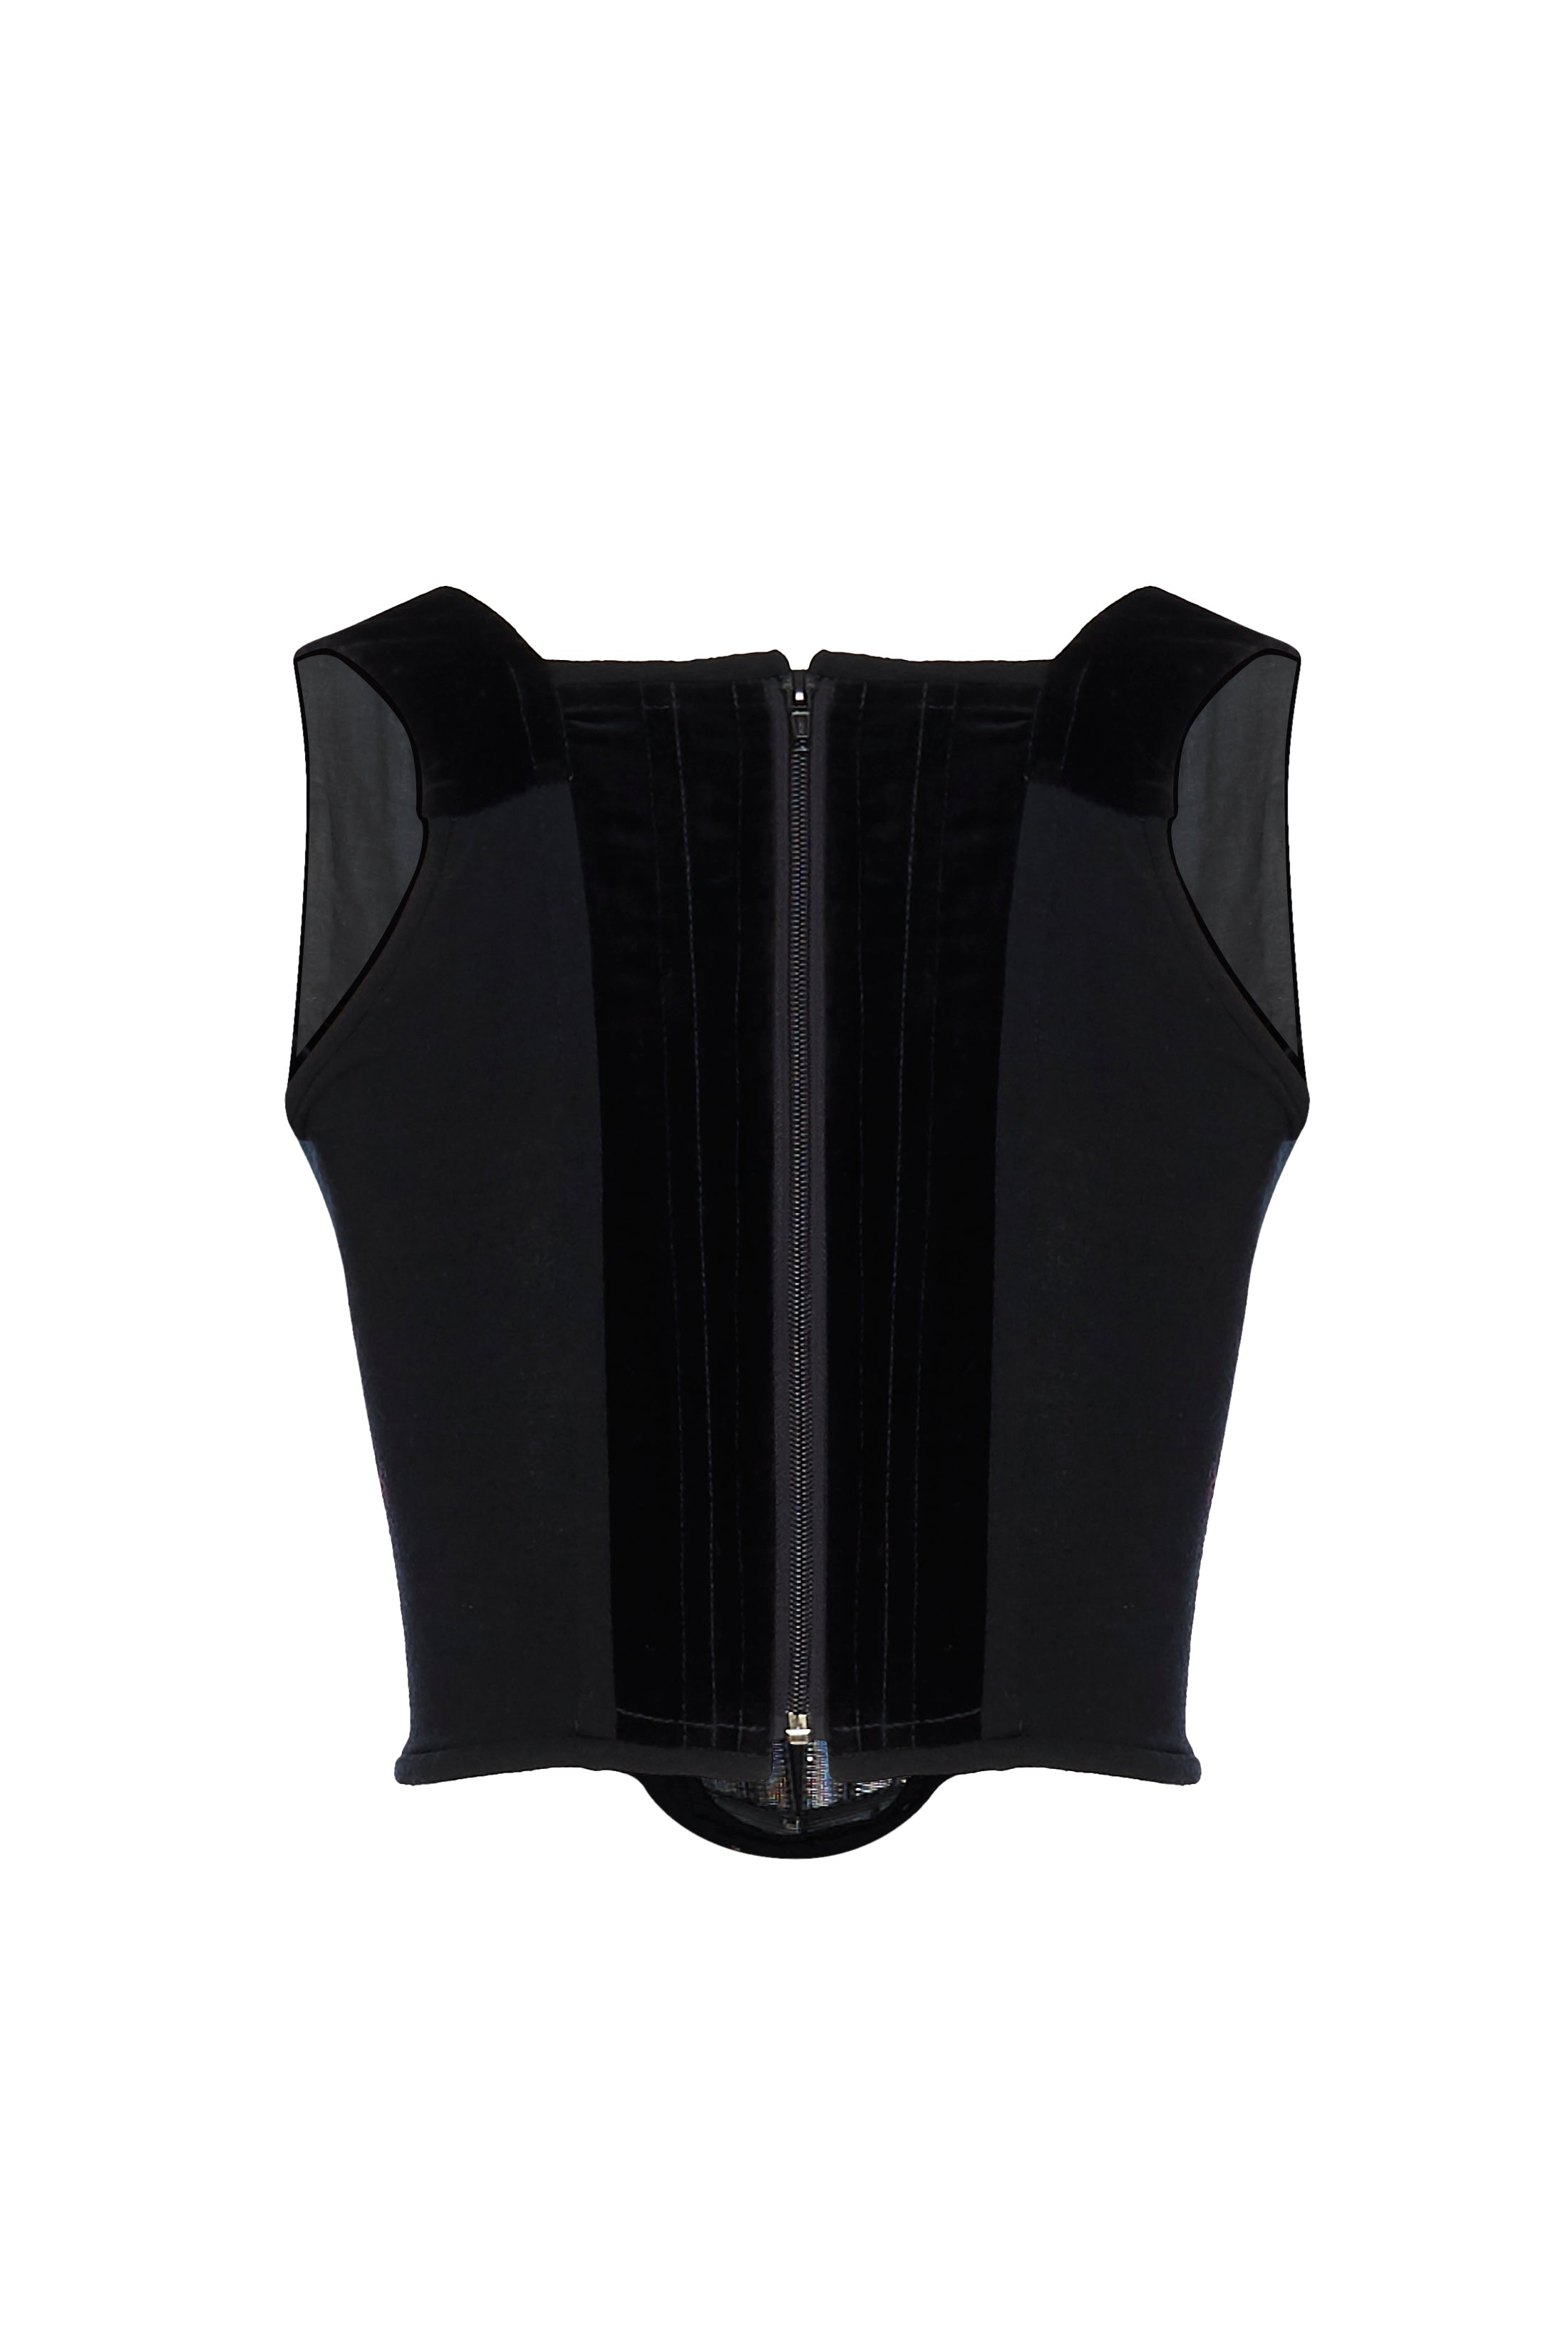 vintage corset top / 90s corset / black suede corset